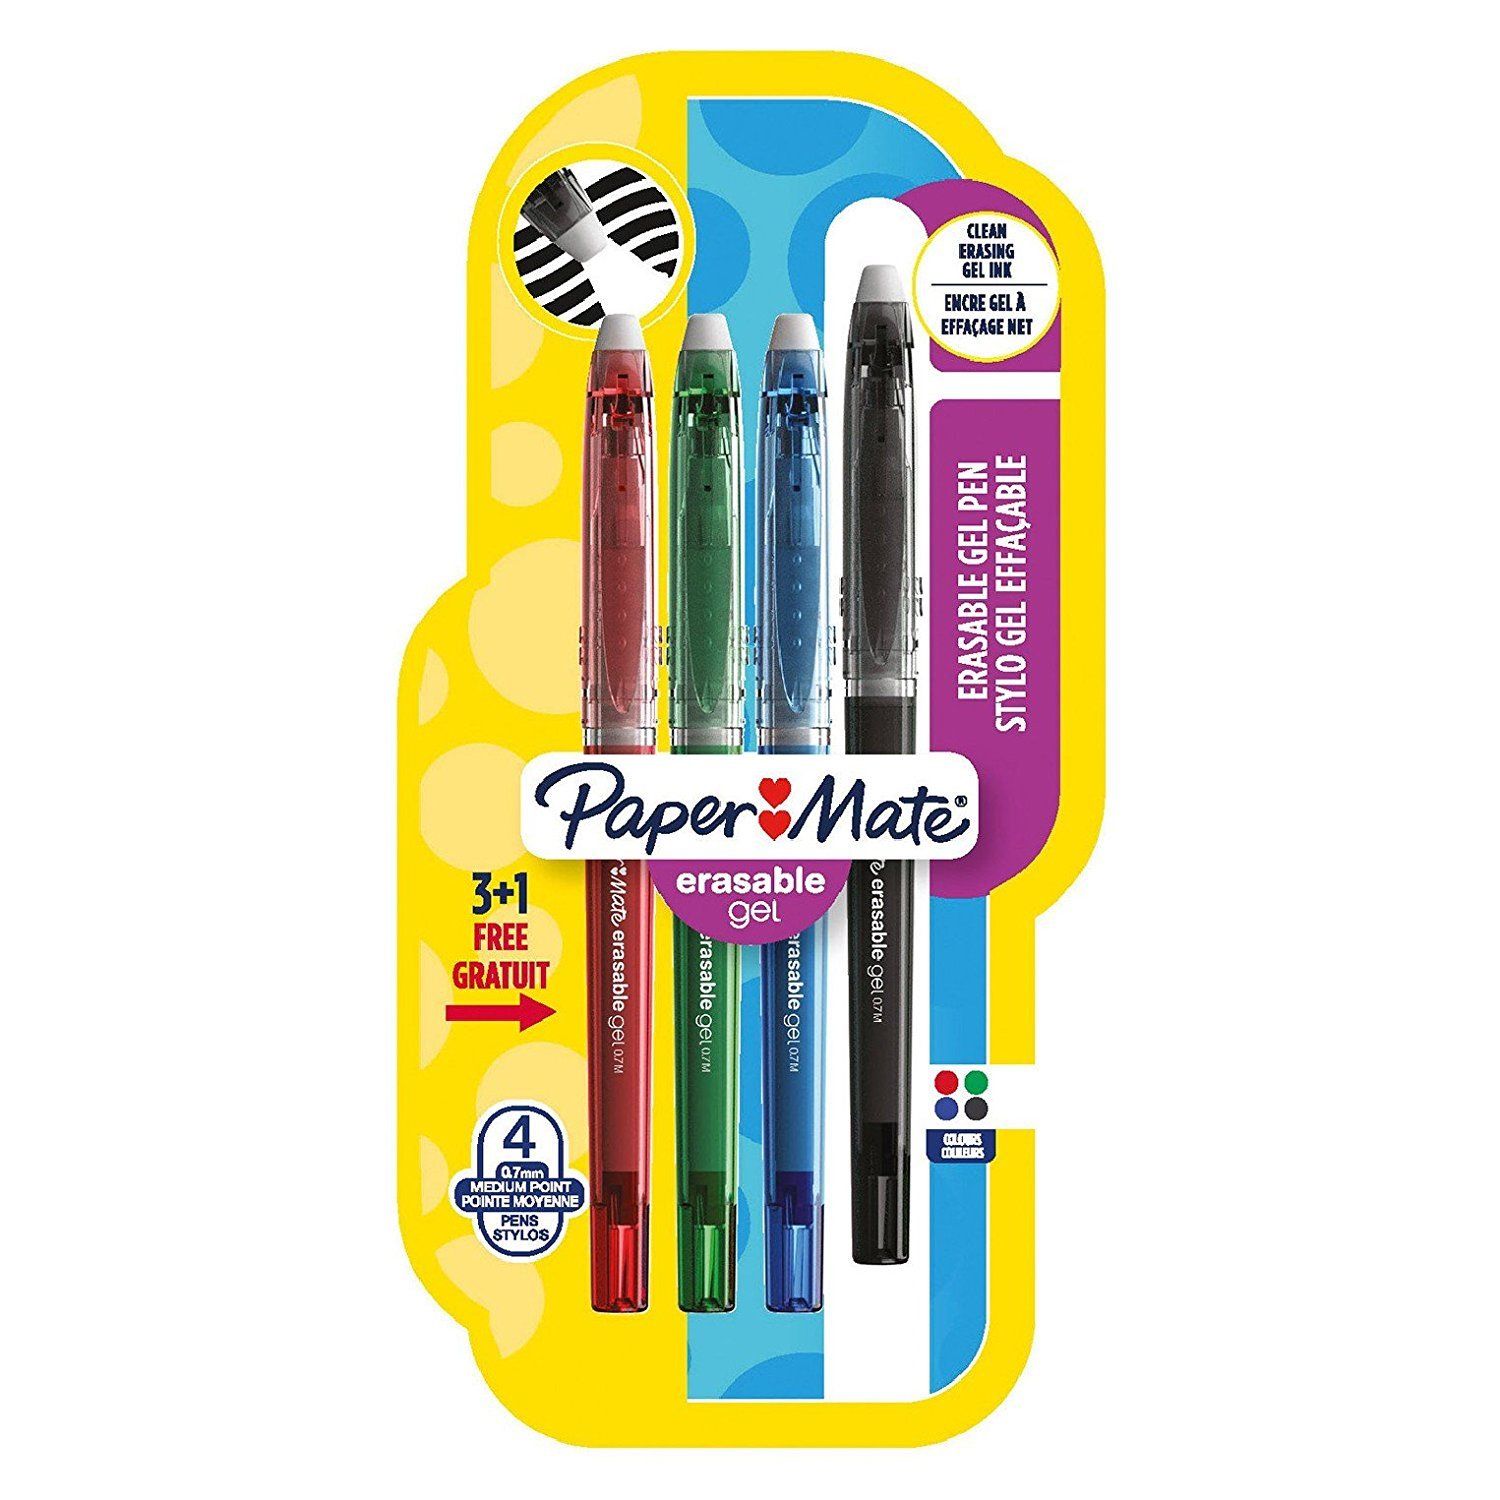 Paper Mate Erasable Gel Rollerball Pen 0.7mm Tip 0.35mm Line Black/Blue/Green/Red (Pack 4)